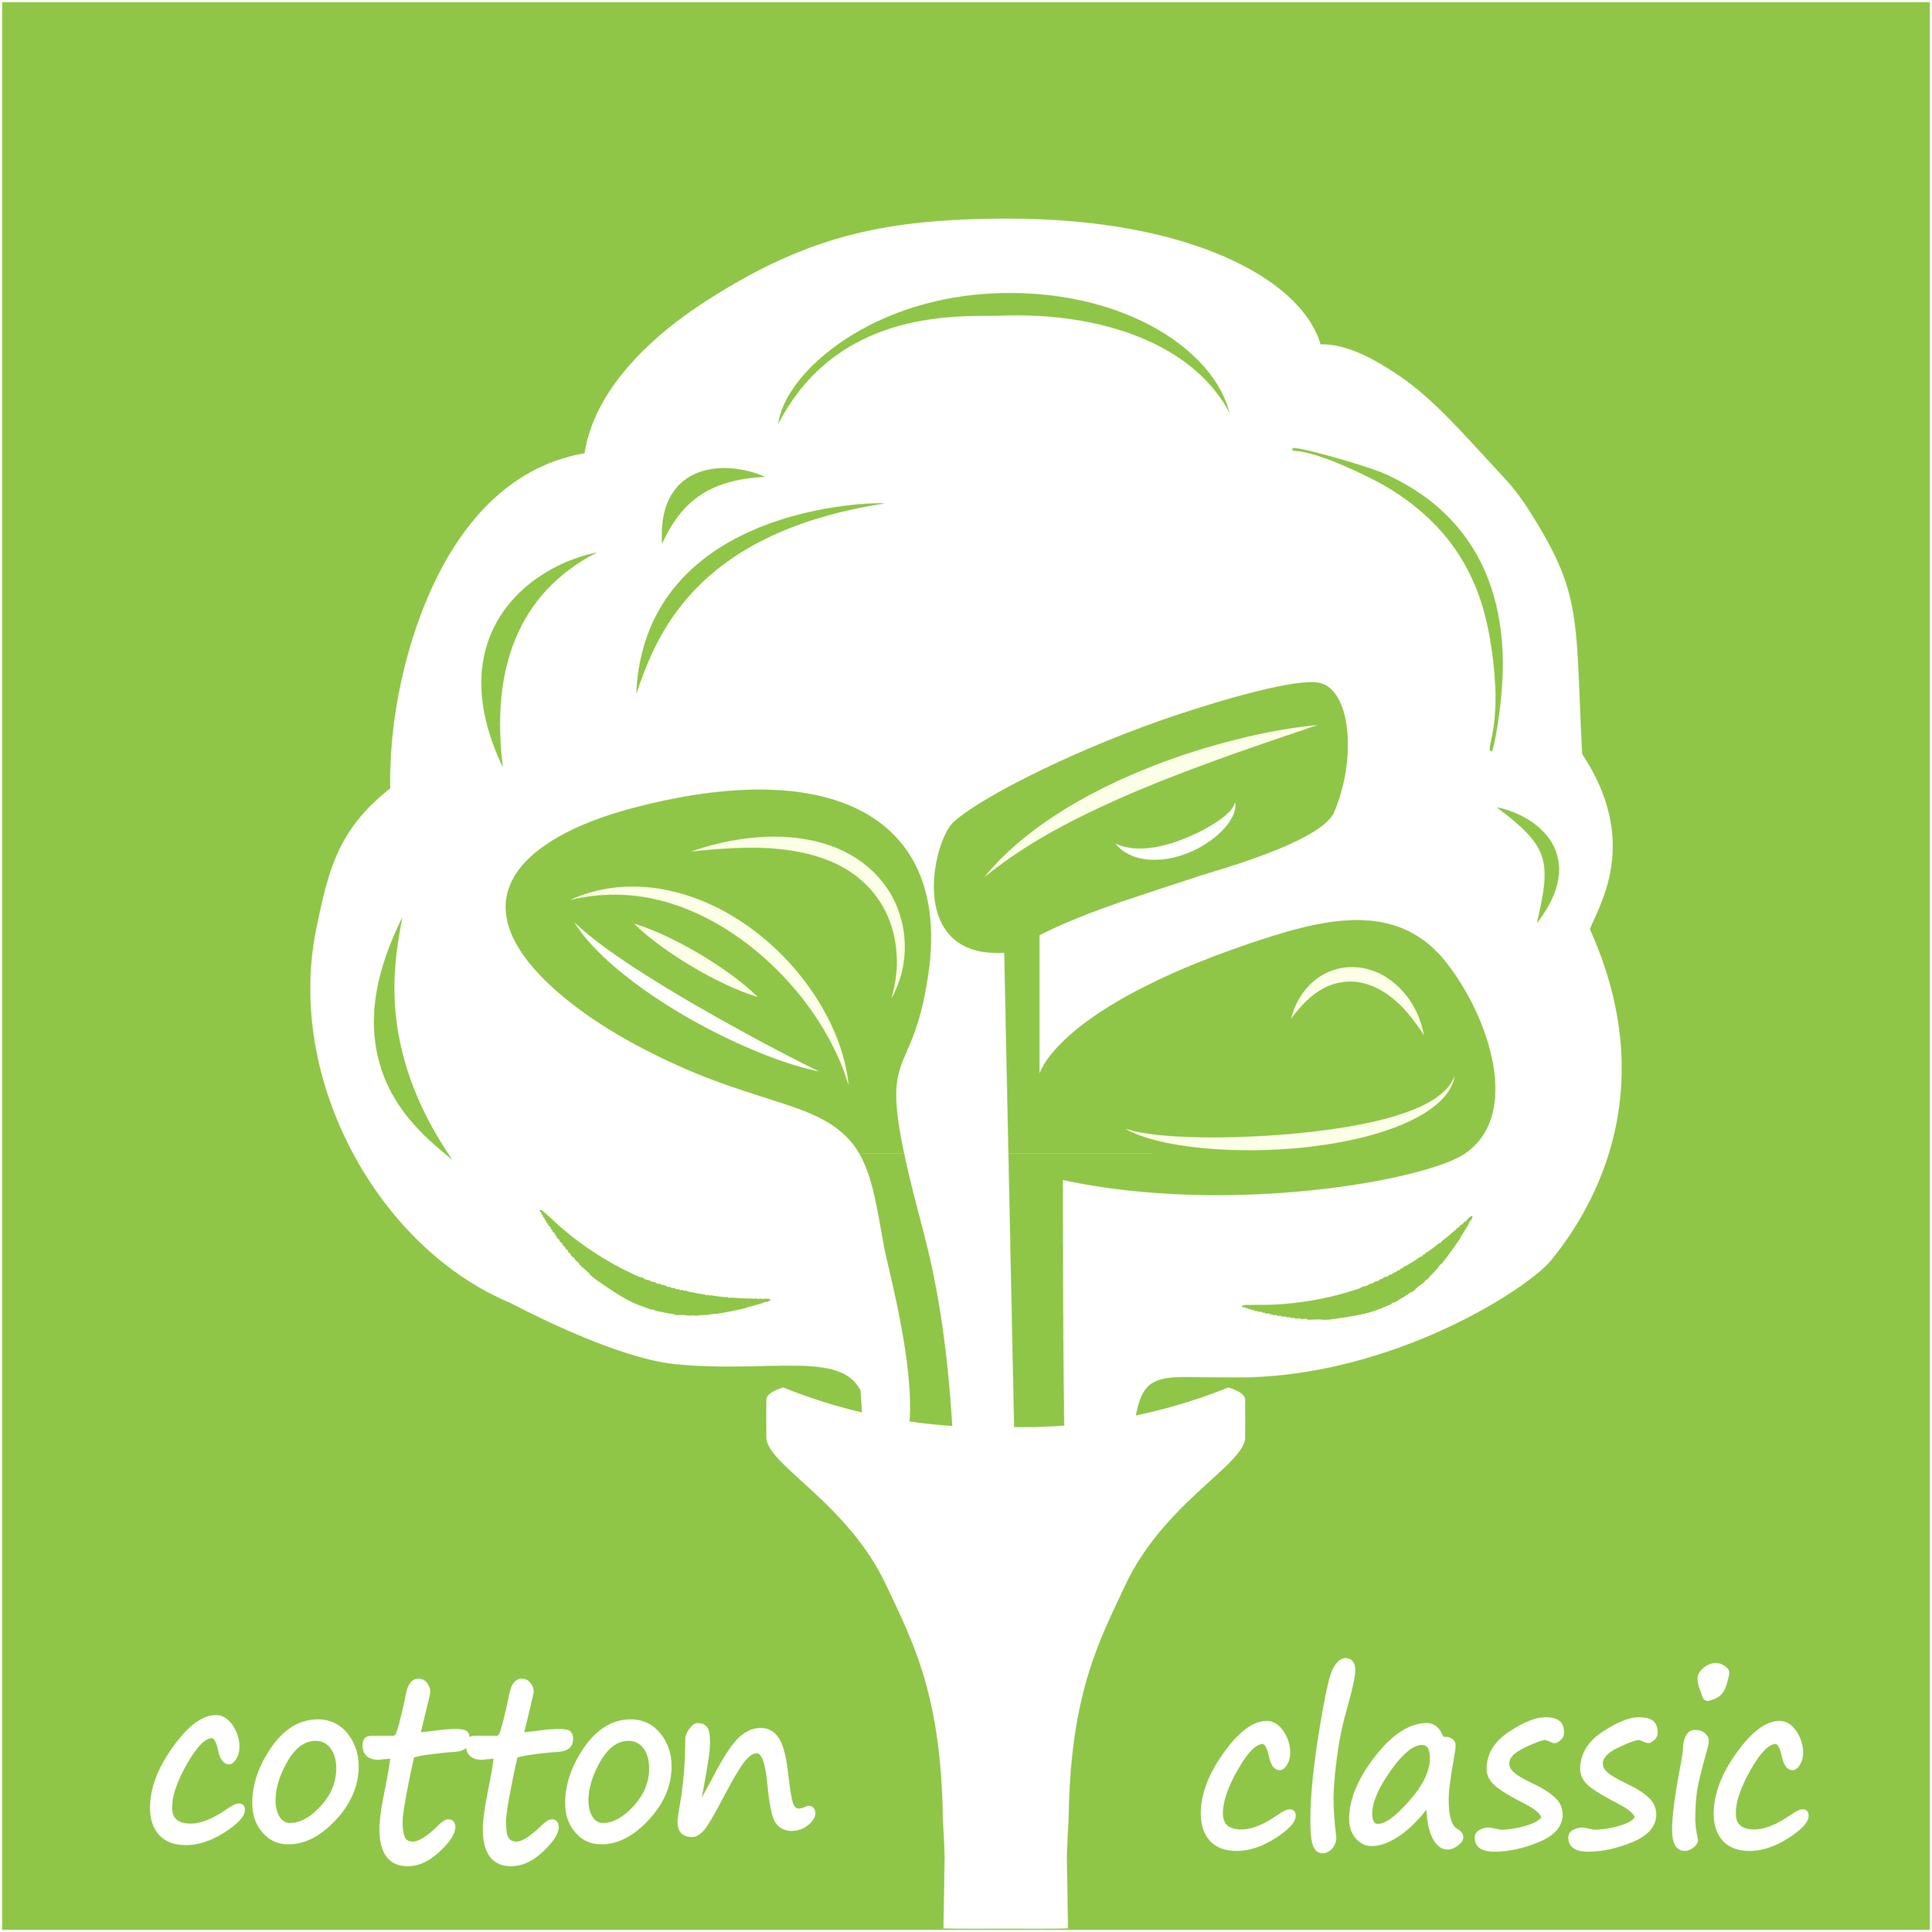 Cotton Classic — Meals on Wheels Spokane: Feeding seniors since 1967